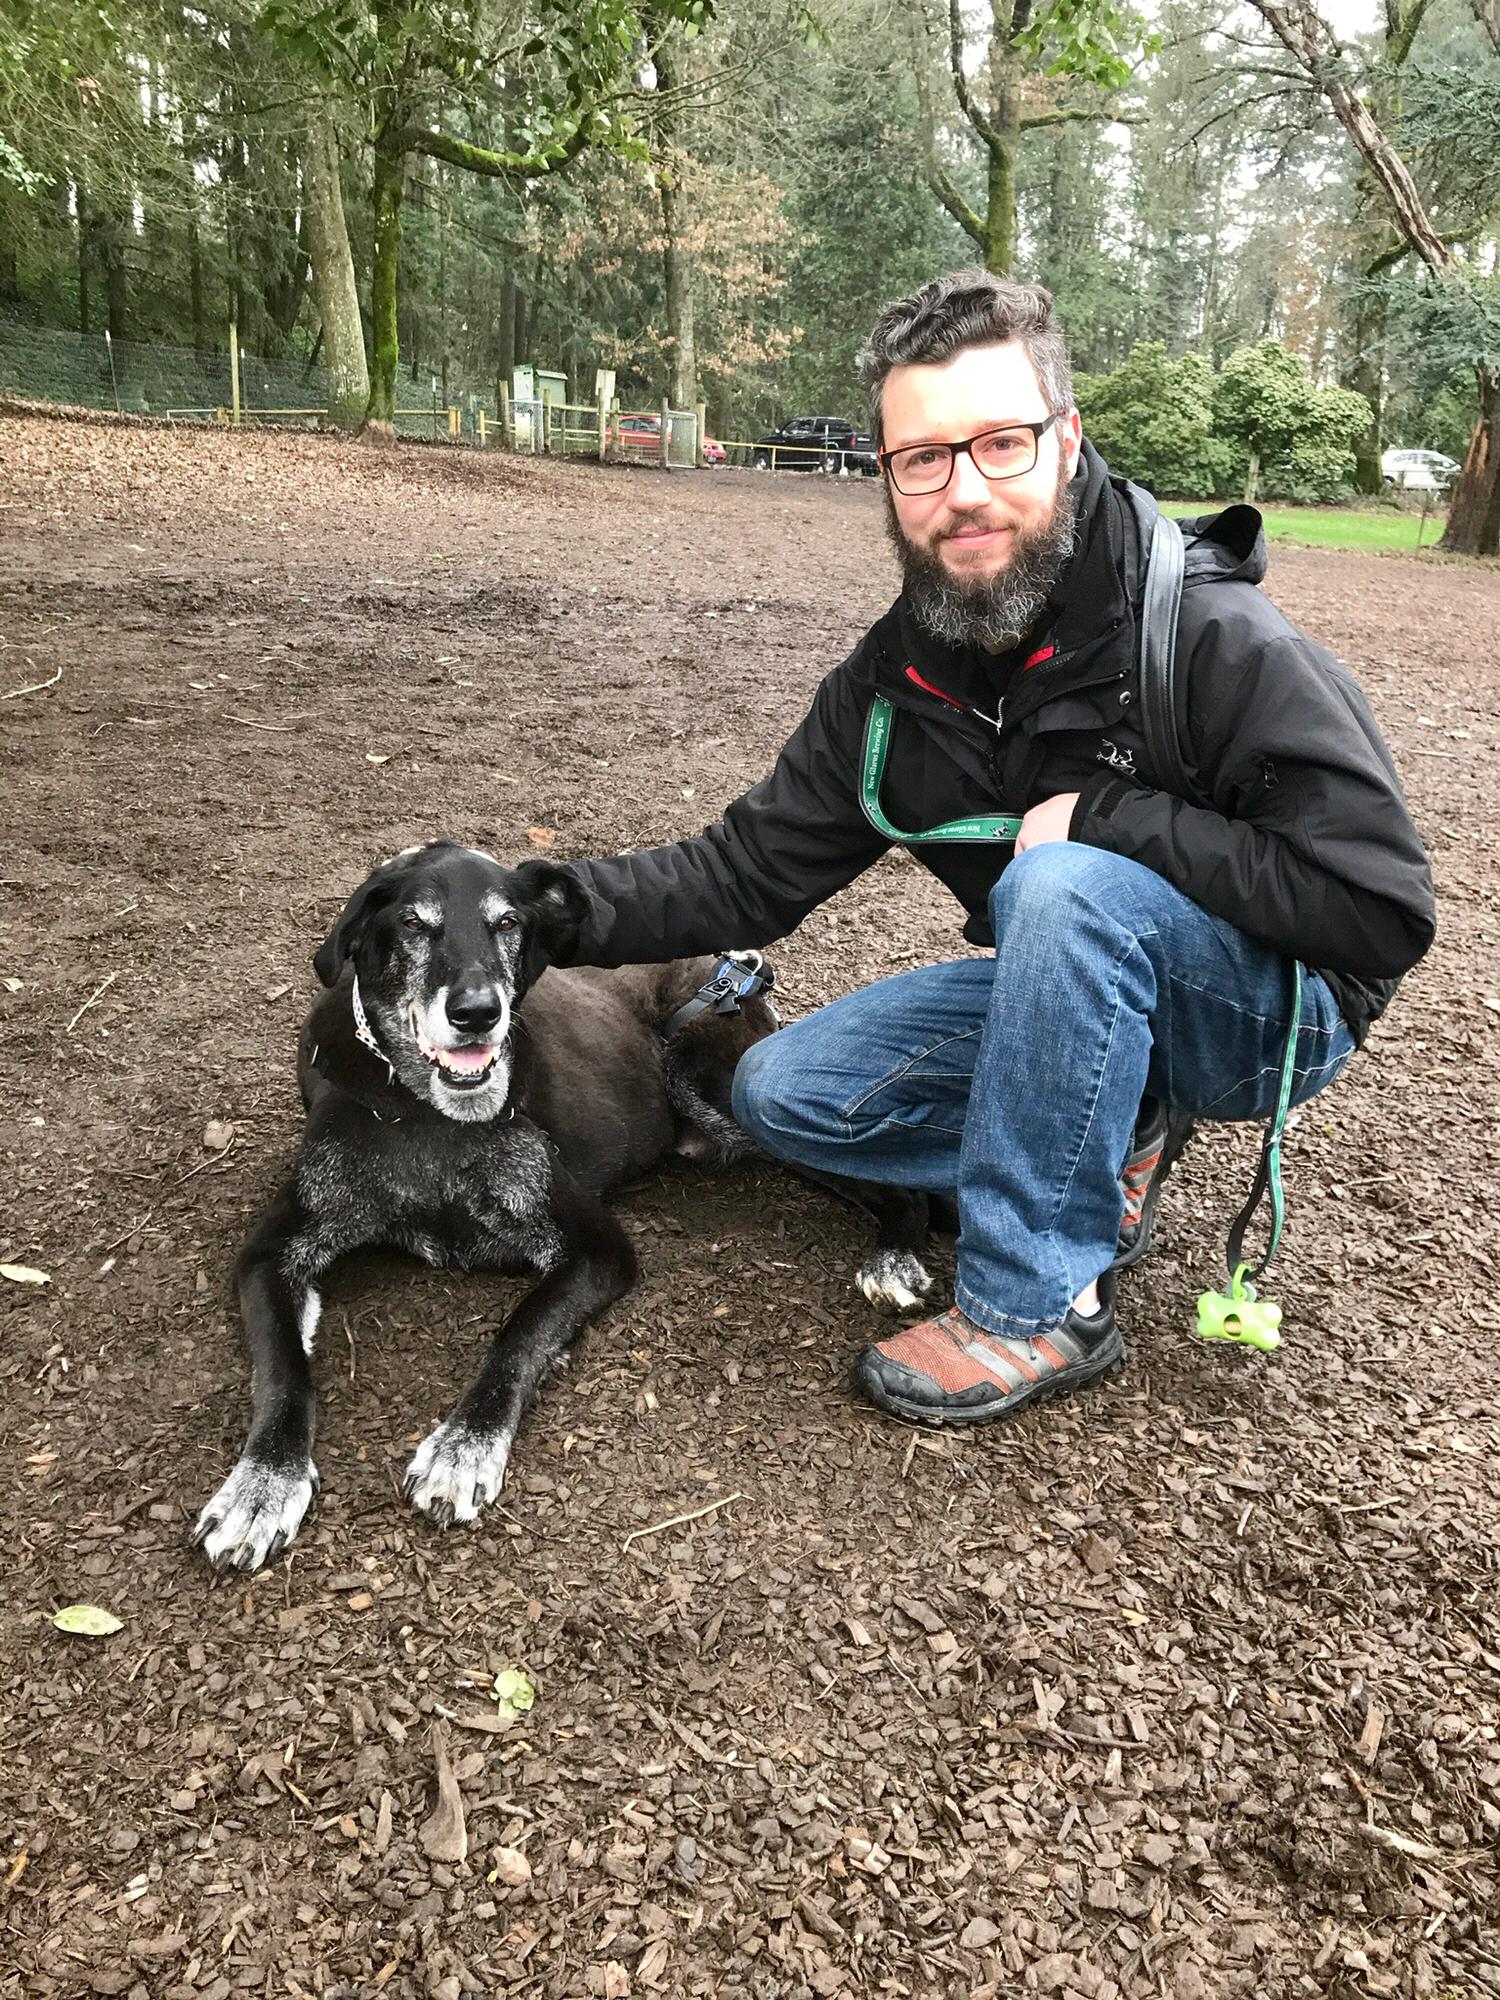 Quality time at Chimney Dog Park with Yogi - Portland, Oregon January 2018